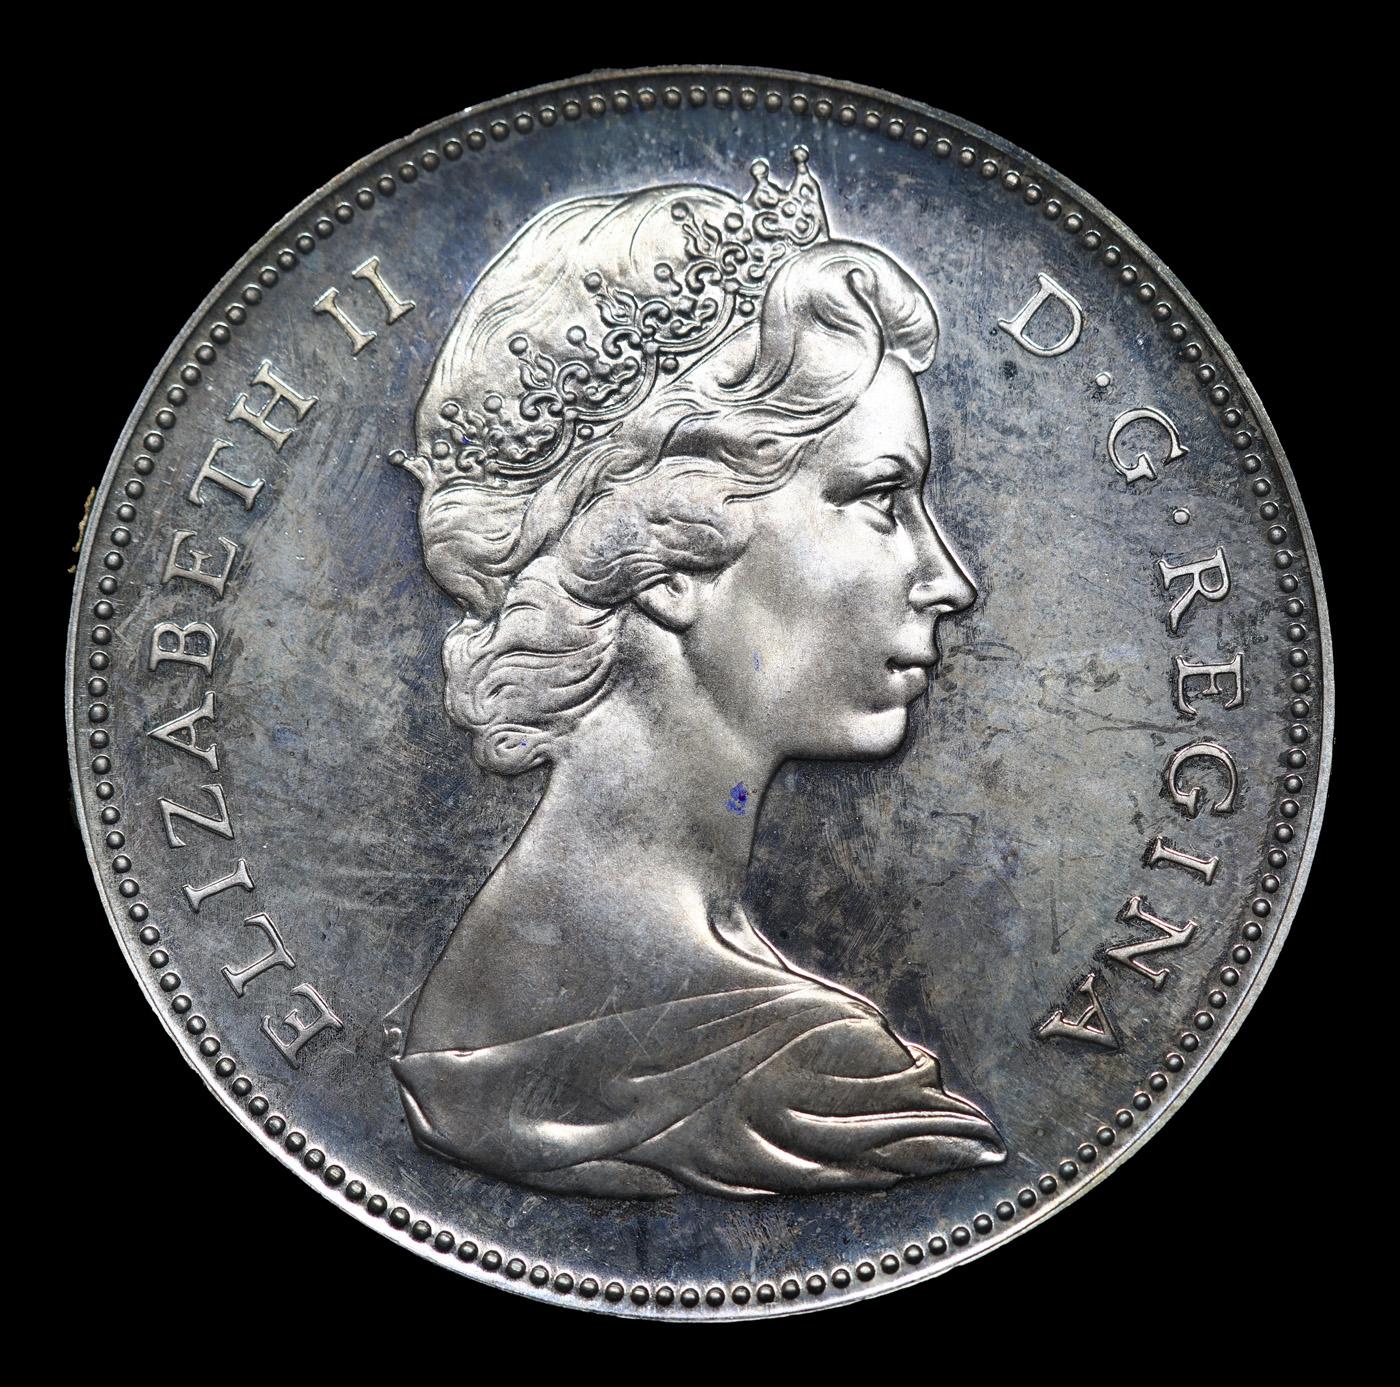 Proof 1967 Canada $1 Silver KM# 70 Grades GEM+ Proof